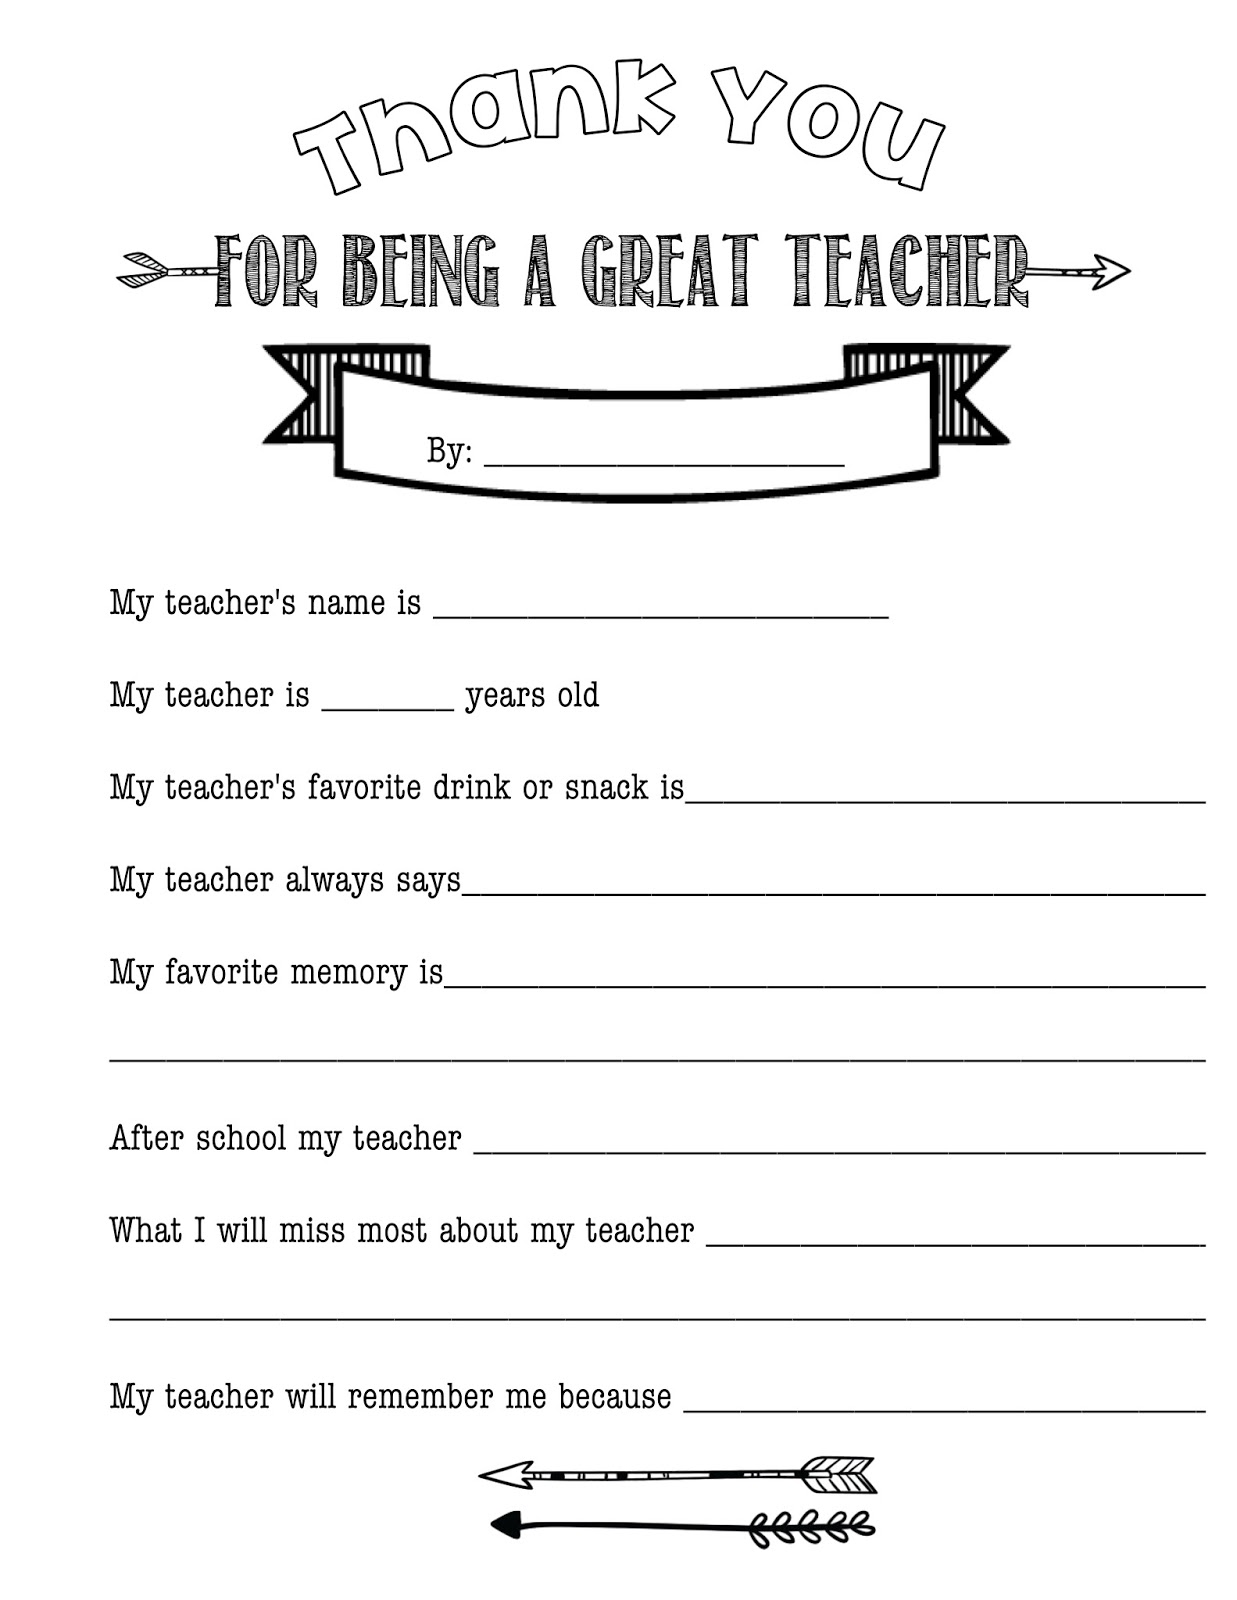 free-teacher-questionnaire